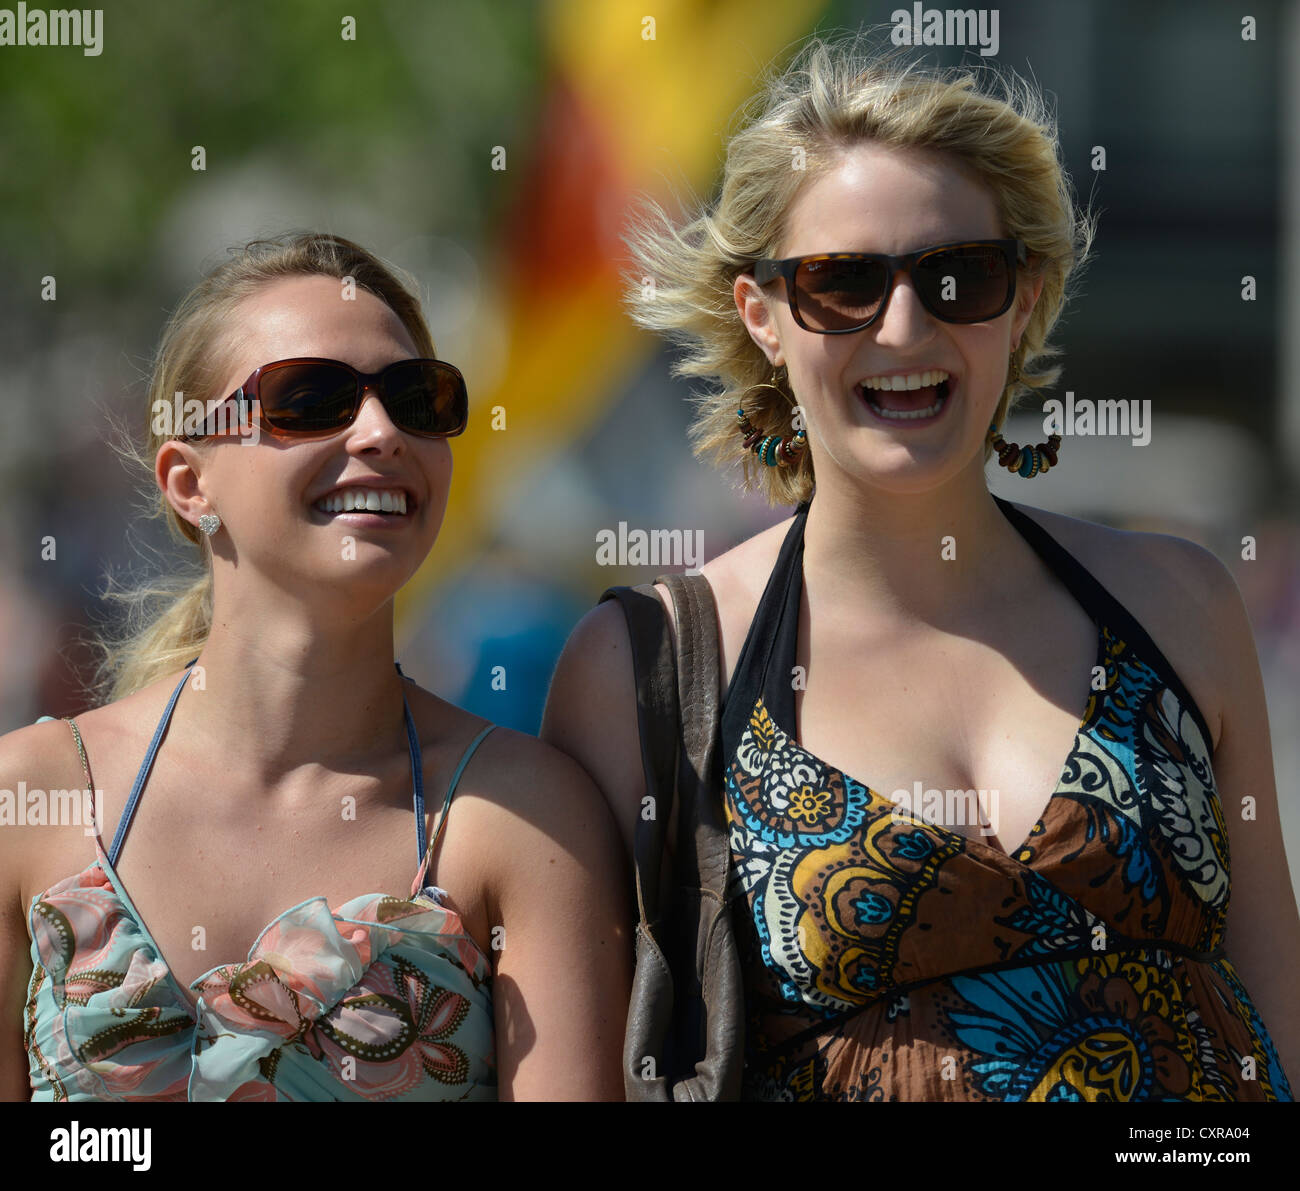 Deux jeunes femmes portant des robes d'été, Koenigsstrasse, Stuttgart, Bade-Wurtemberg, Allemagne, Europe, PublicGround Banque D'Images